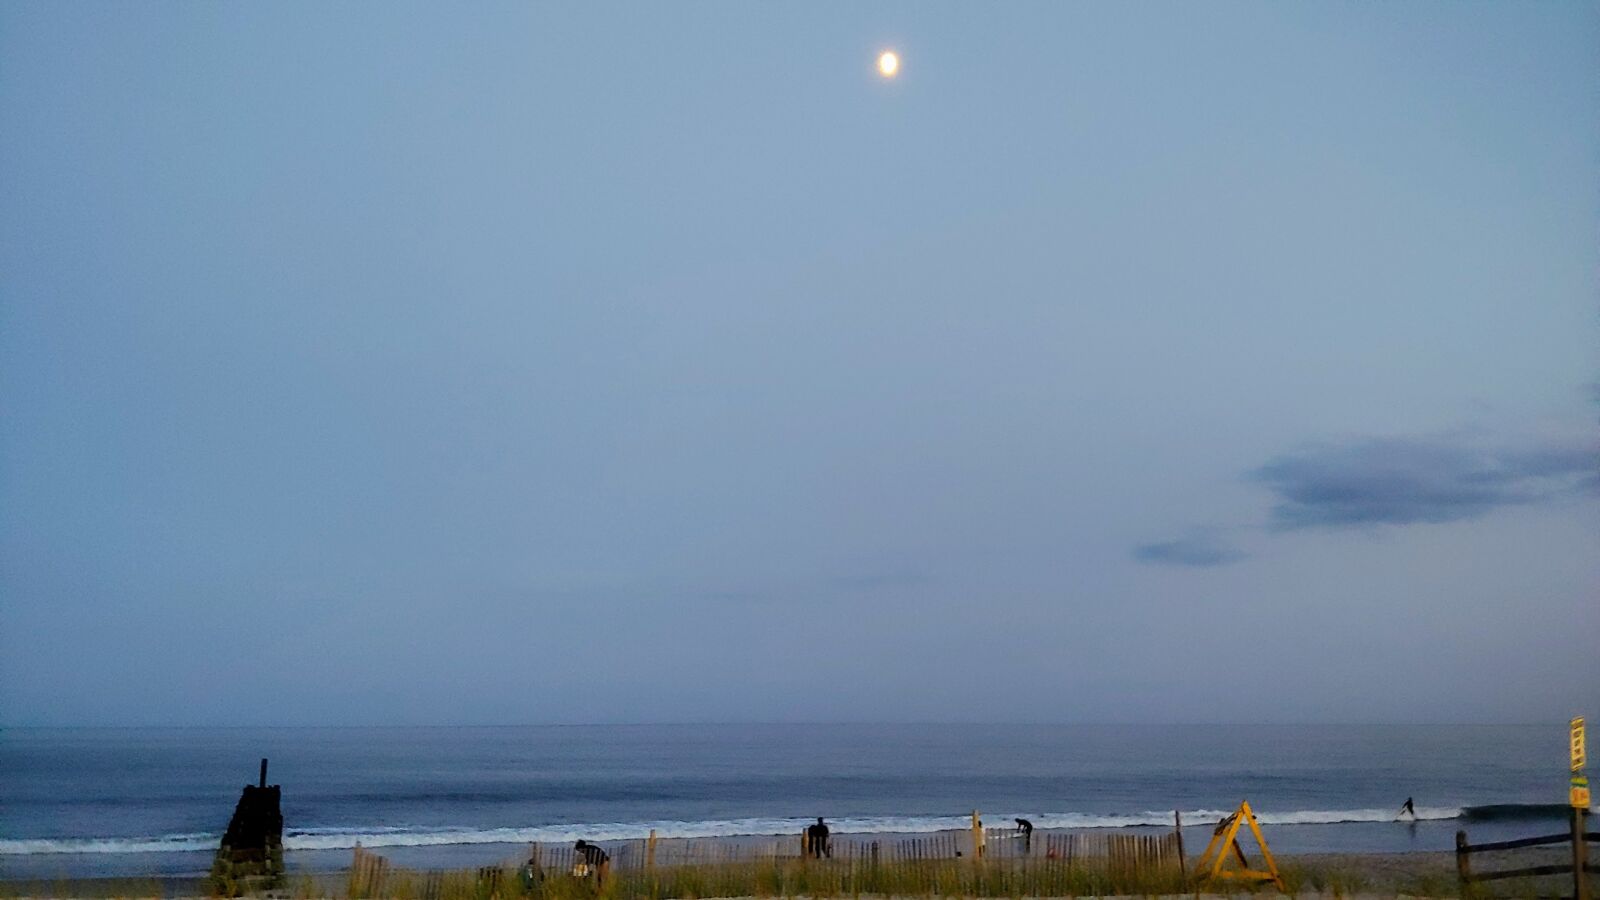 LG G7 THINQ sample photo. Beach, moon, moonlight photography